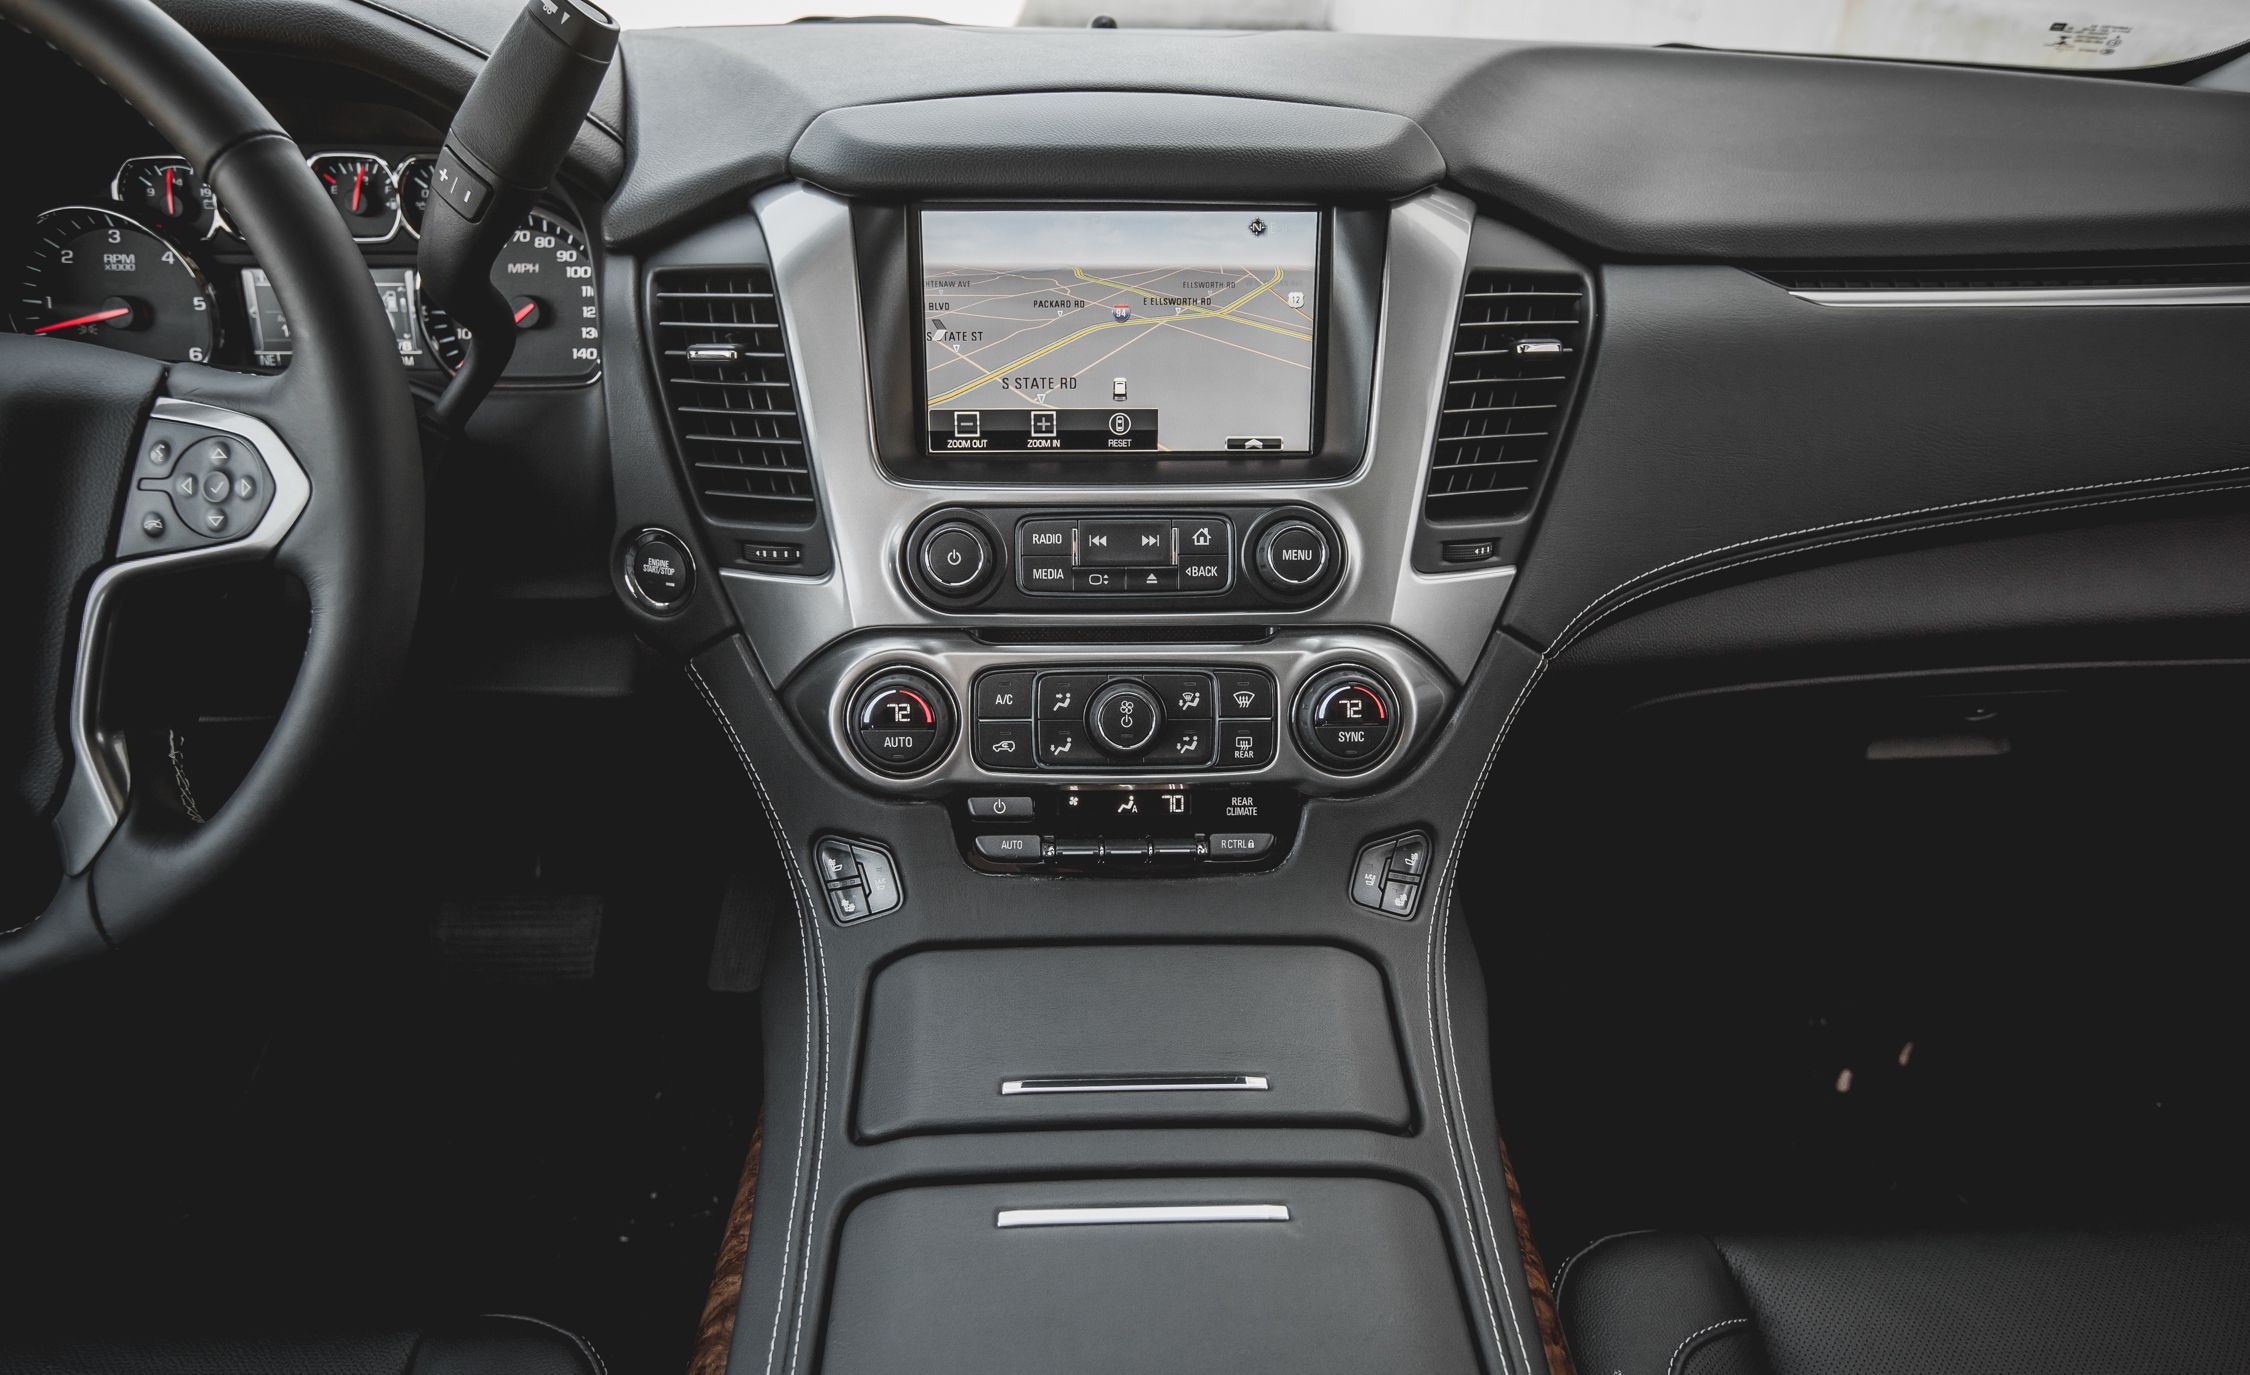 2015 Chevrolet Suburban Ltz Interior (View 21 of 33)